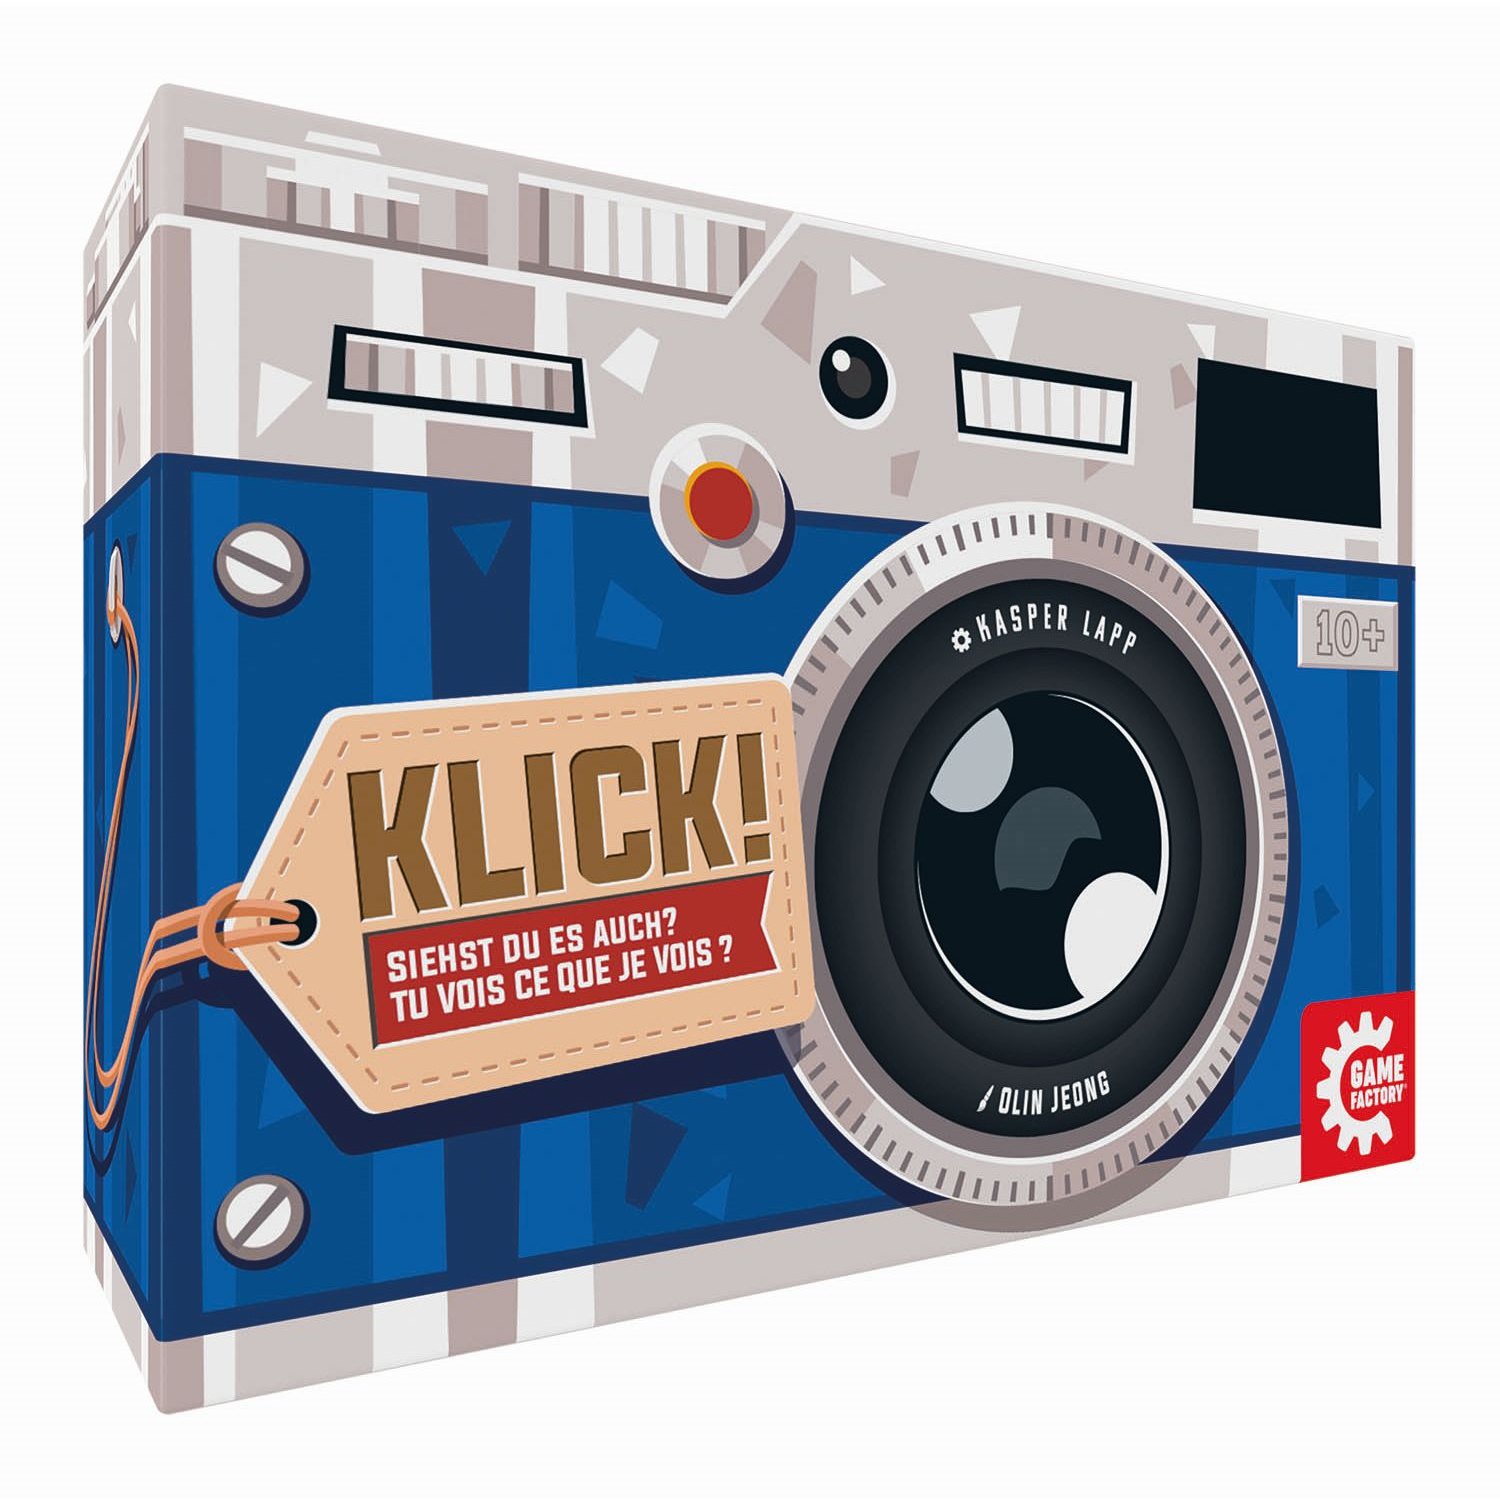 KLICK! – das Partyspiel in der Fotoapparat-Verpackung